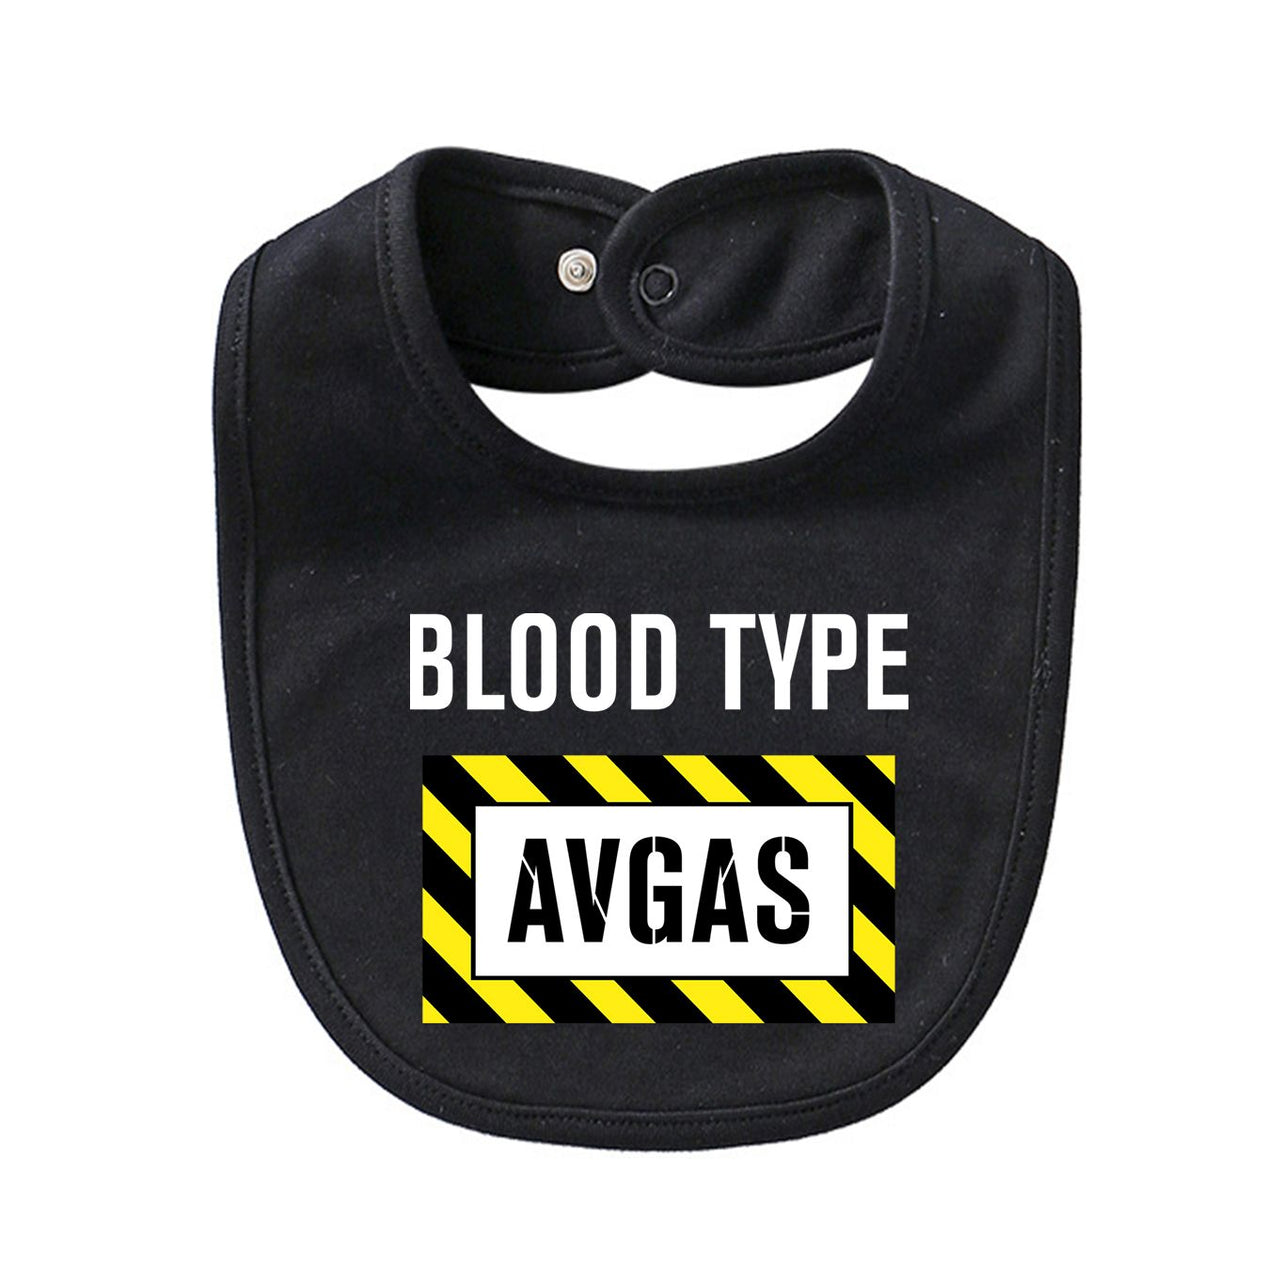 Blood Type AVGAS Designed Baby Saliva & Feeding Towels